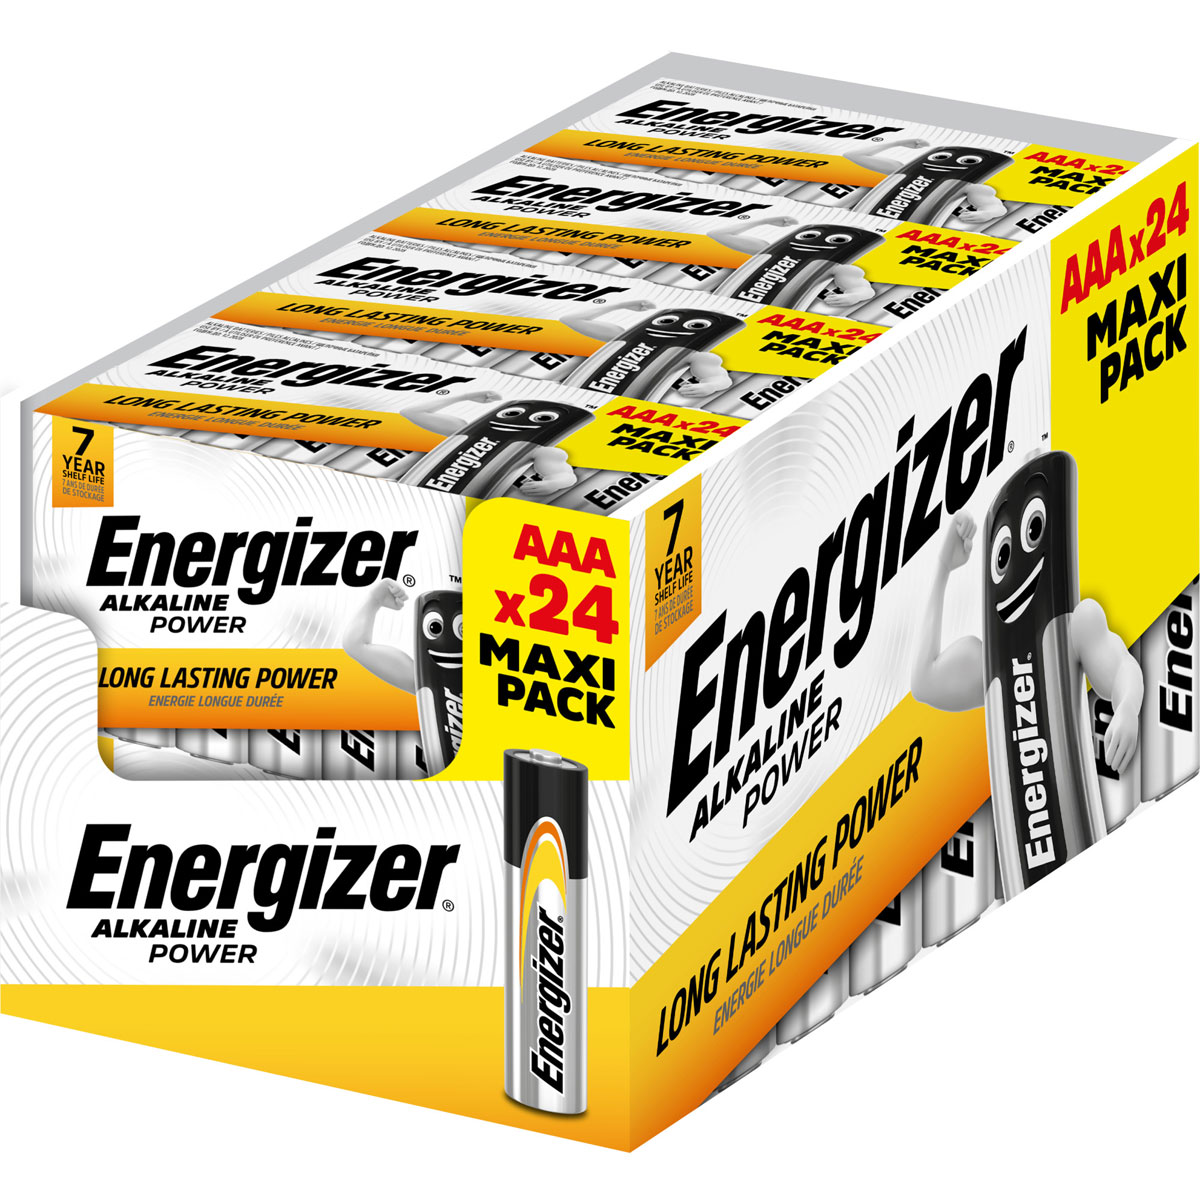 Energizer AAA-Batterie Alkaline Stk. 253060 Maxi-Pack | 24 Power